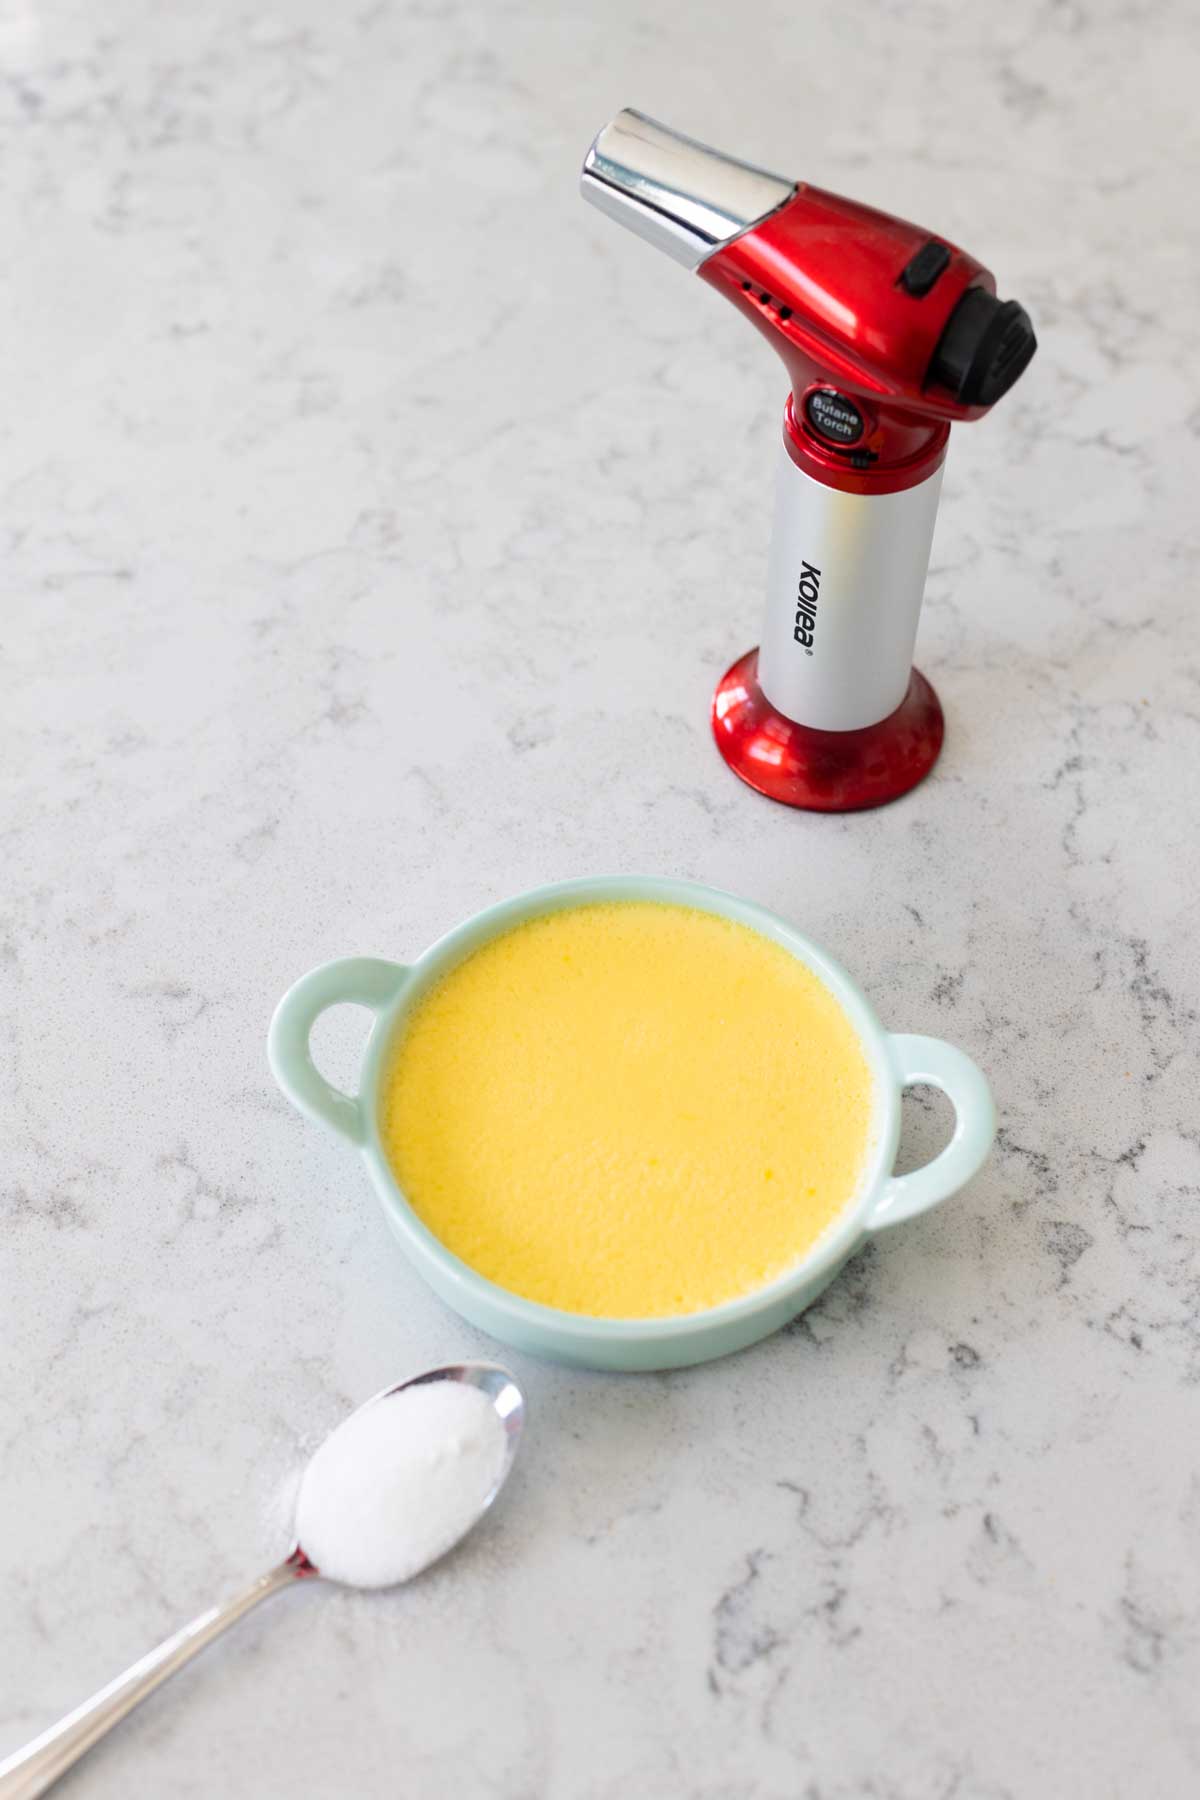 A kitchen torch, a spoon of sugar, and one Crème Brûlée ramekin.